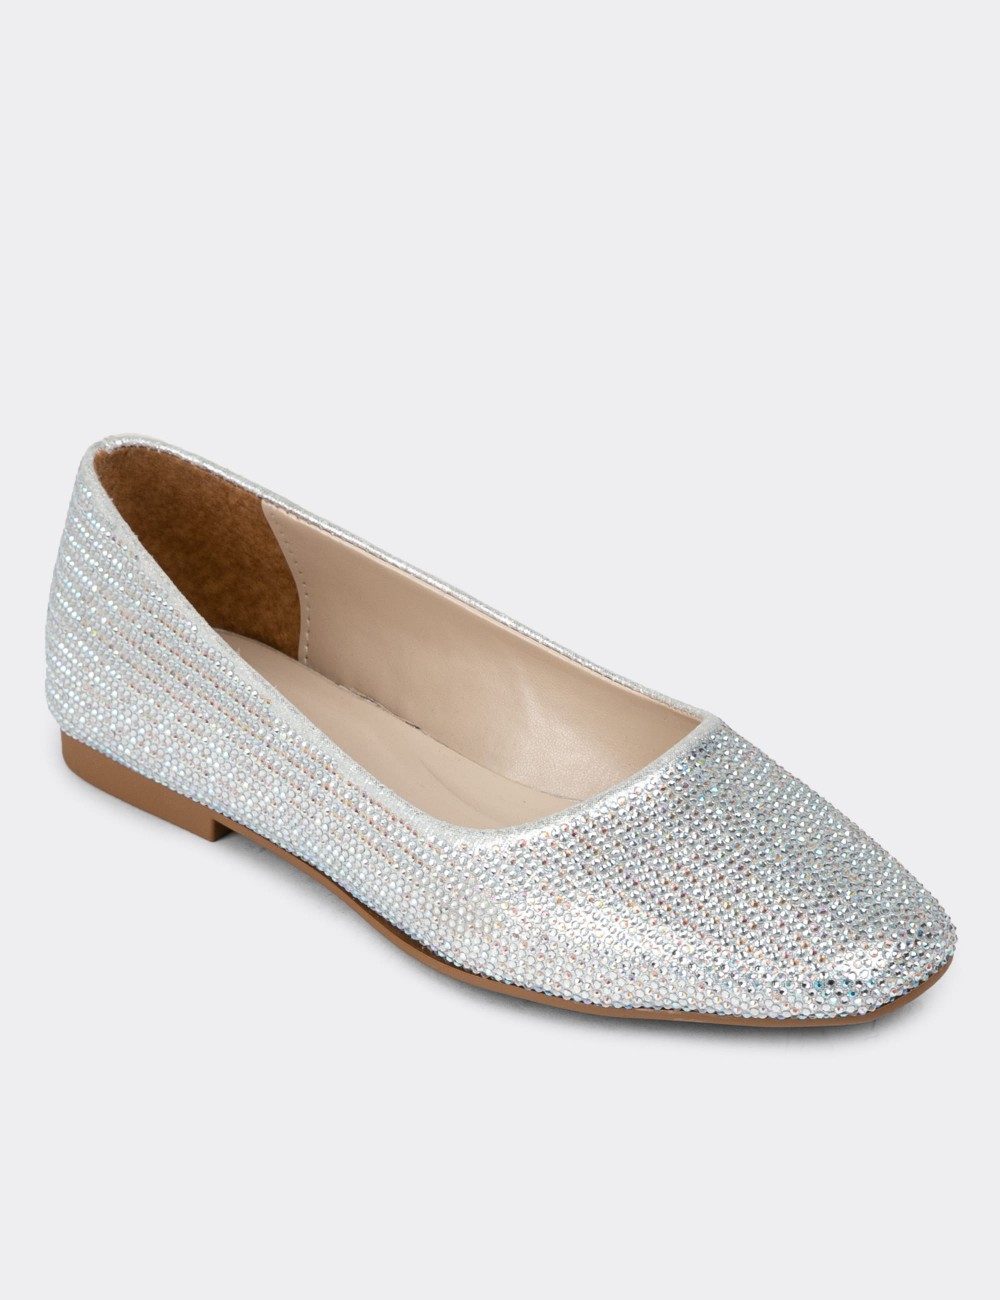 Silver Loafers - K2031ZGMSC01